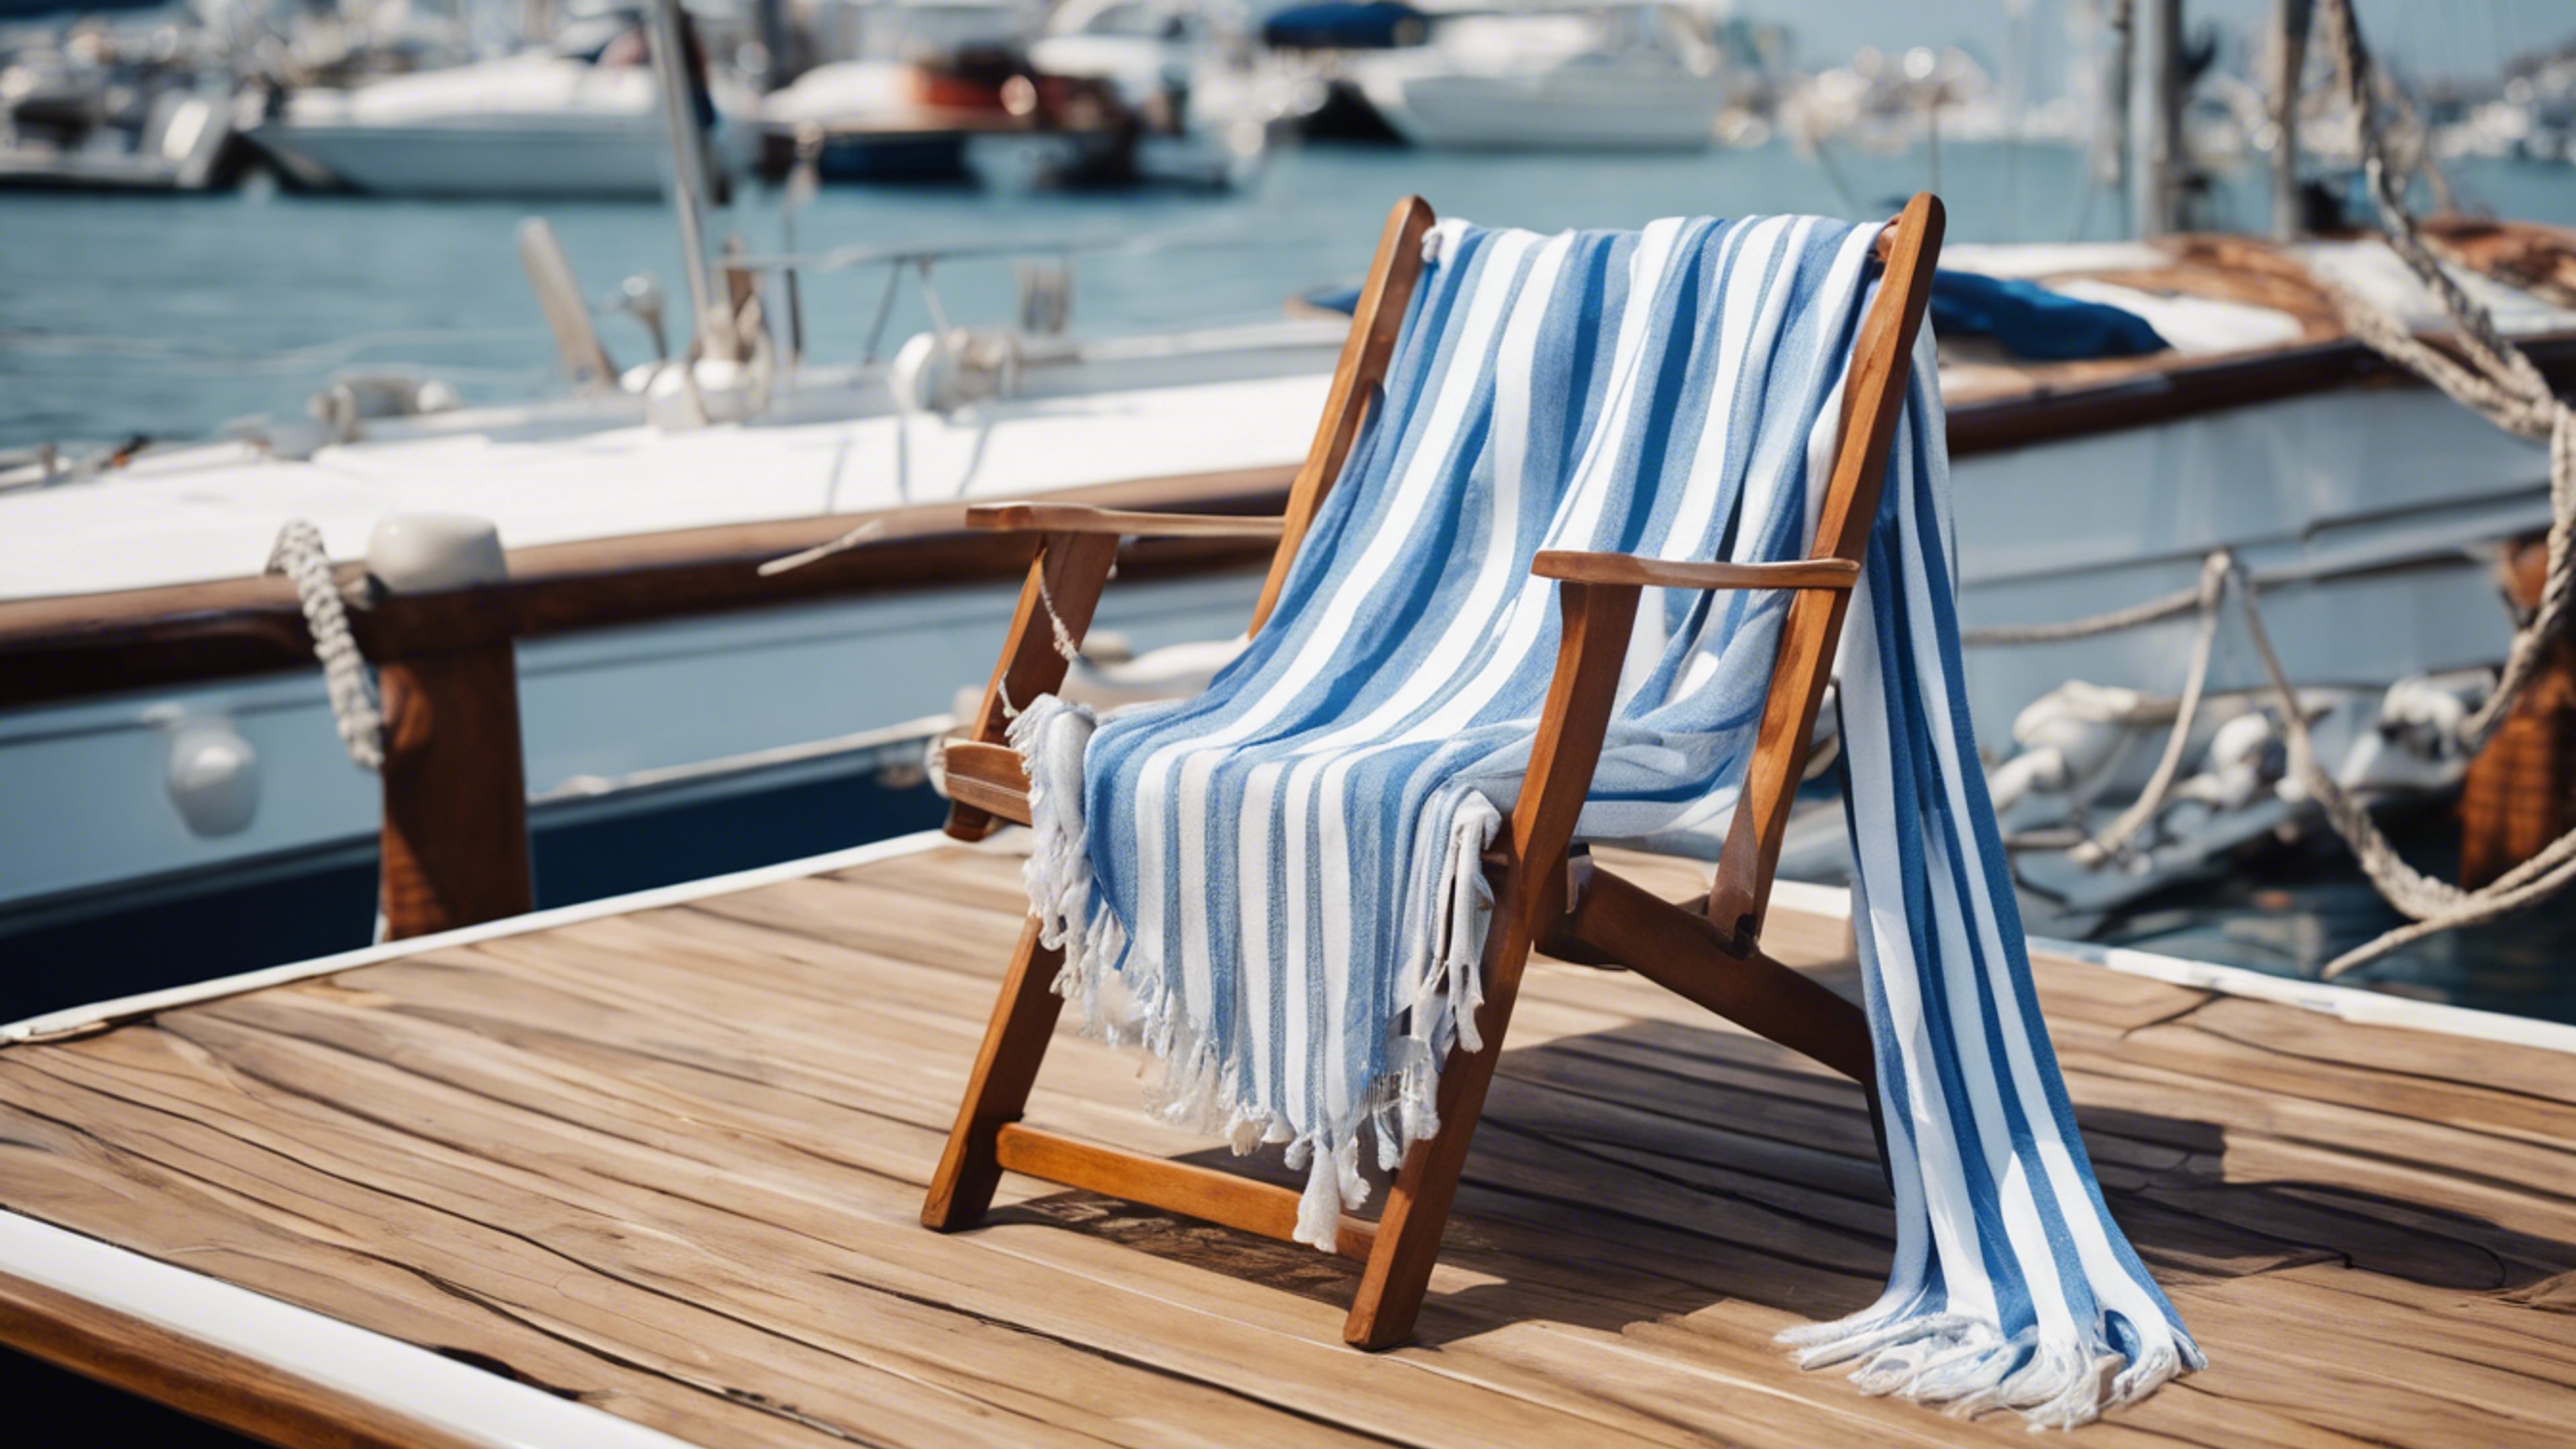 Preppy blue and white striped shawl draped over a teak deck chair on a sailboat. Wallpaper[8e59a438a9aa4e06a25d]